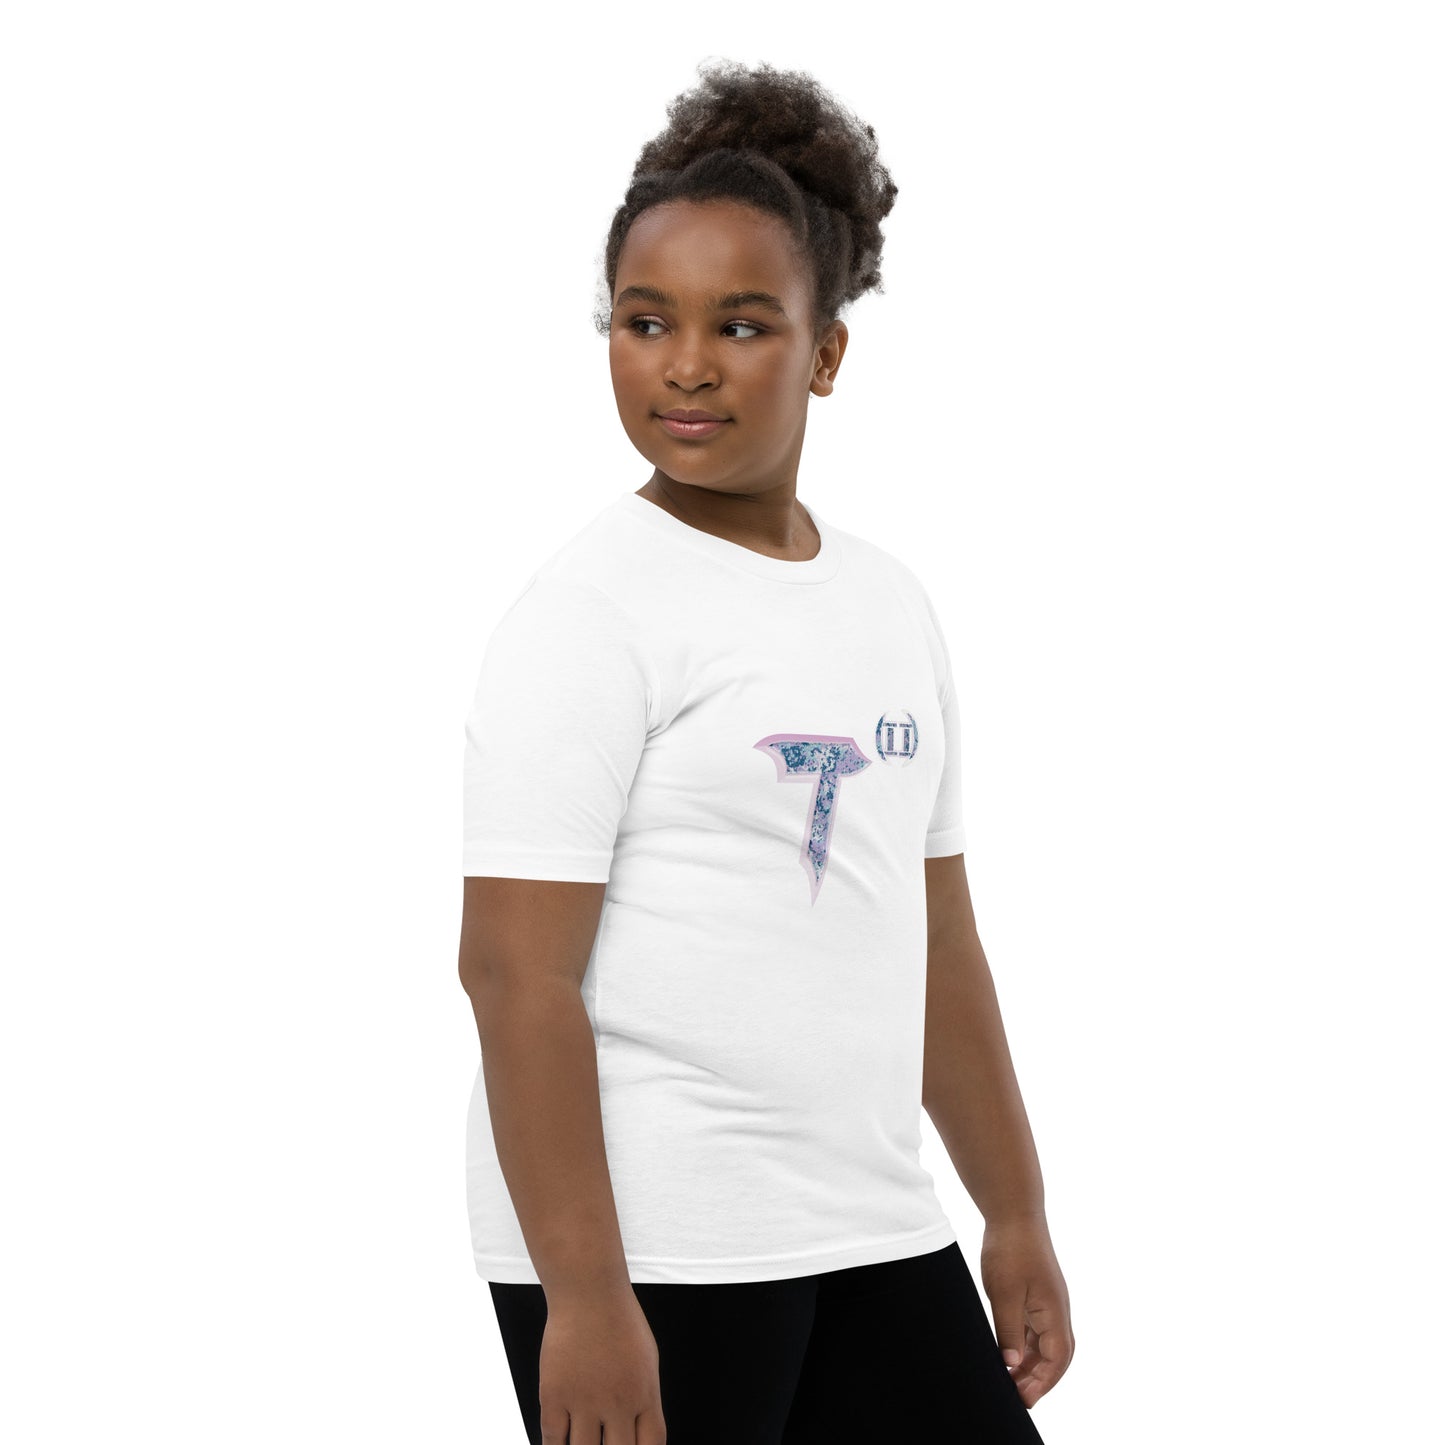 Youth Short Sleeve T-Shirt "T(2)" Digital Elegant Edition